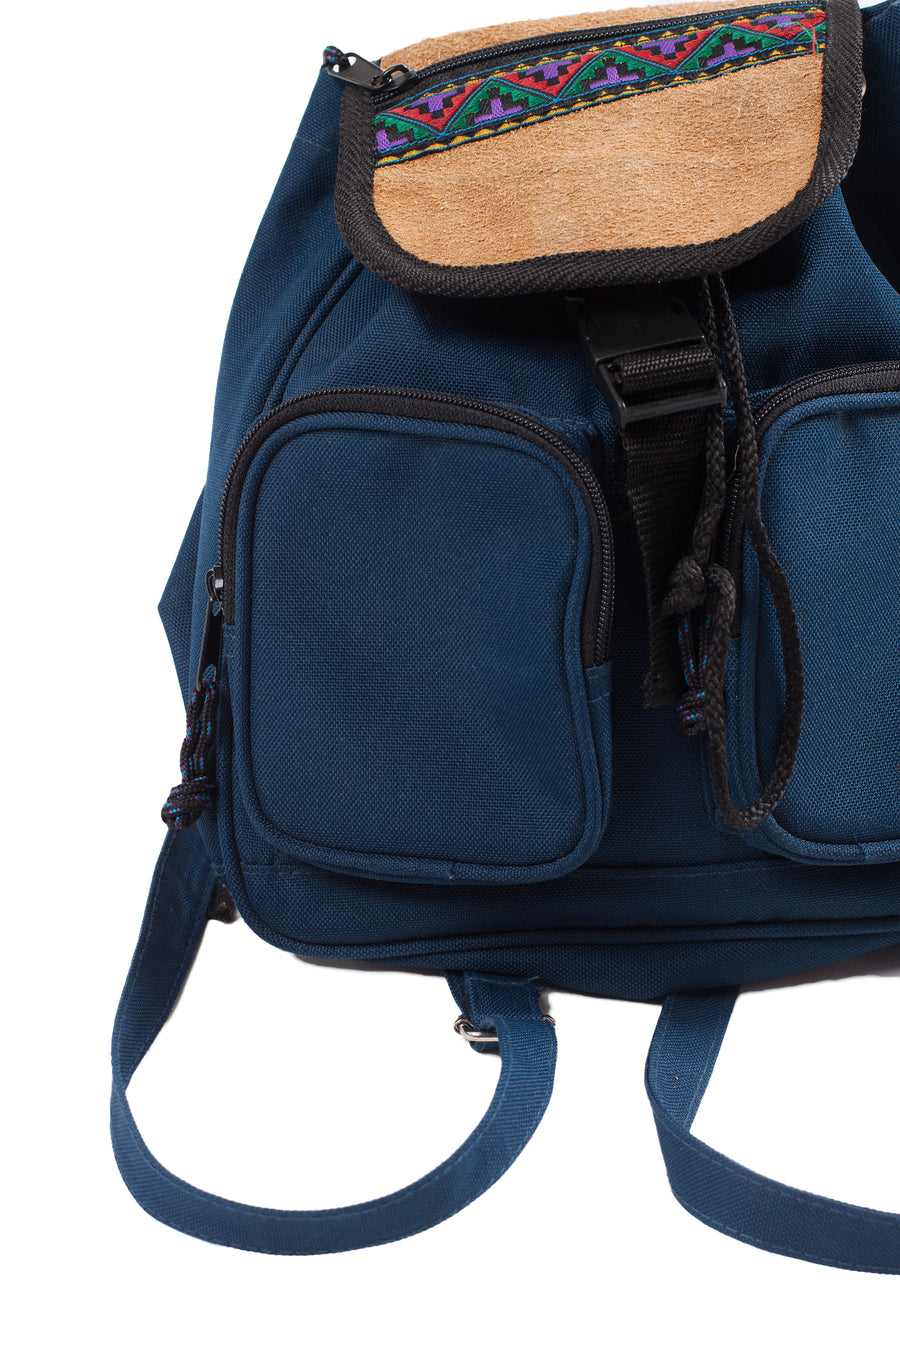 Bags | Hempshire Retro Style Pink Purple Backpack Purse W Pockets New Bag  9s | Poshmark